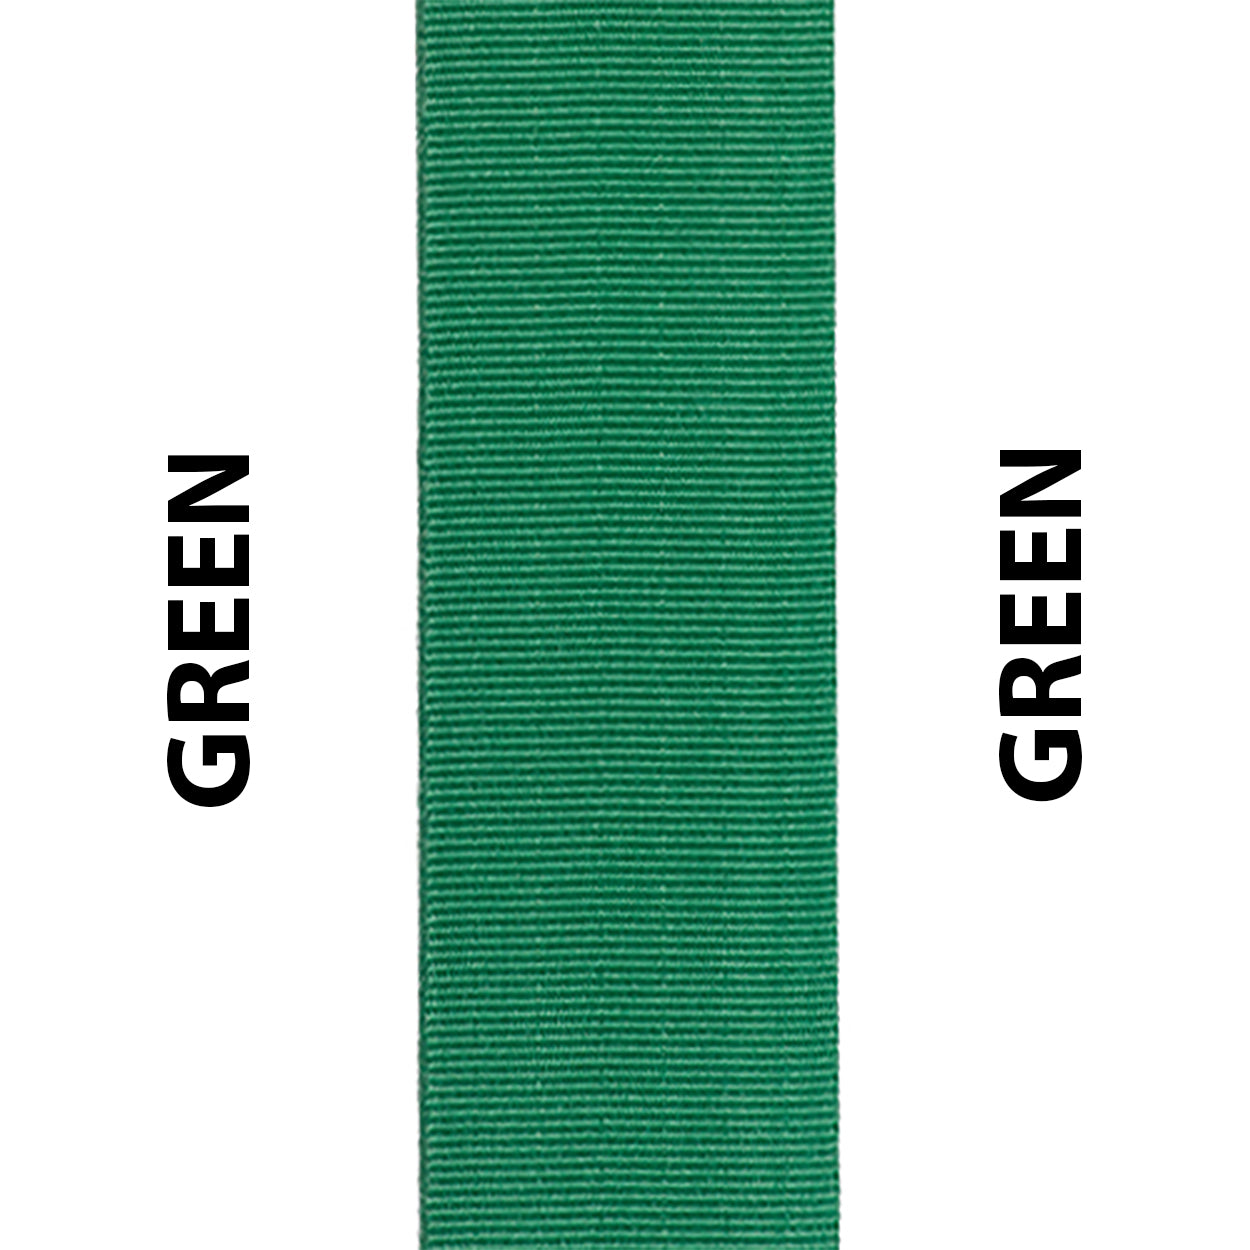 Green Seat Belt Webbing Replacement Strap